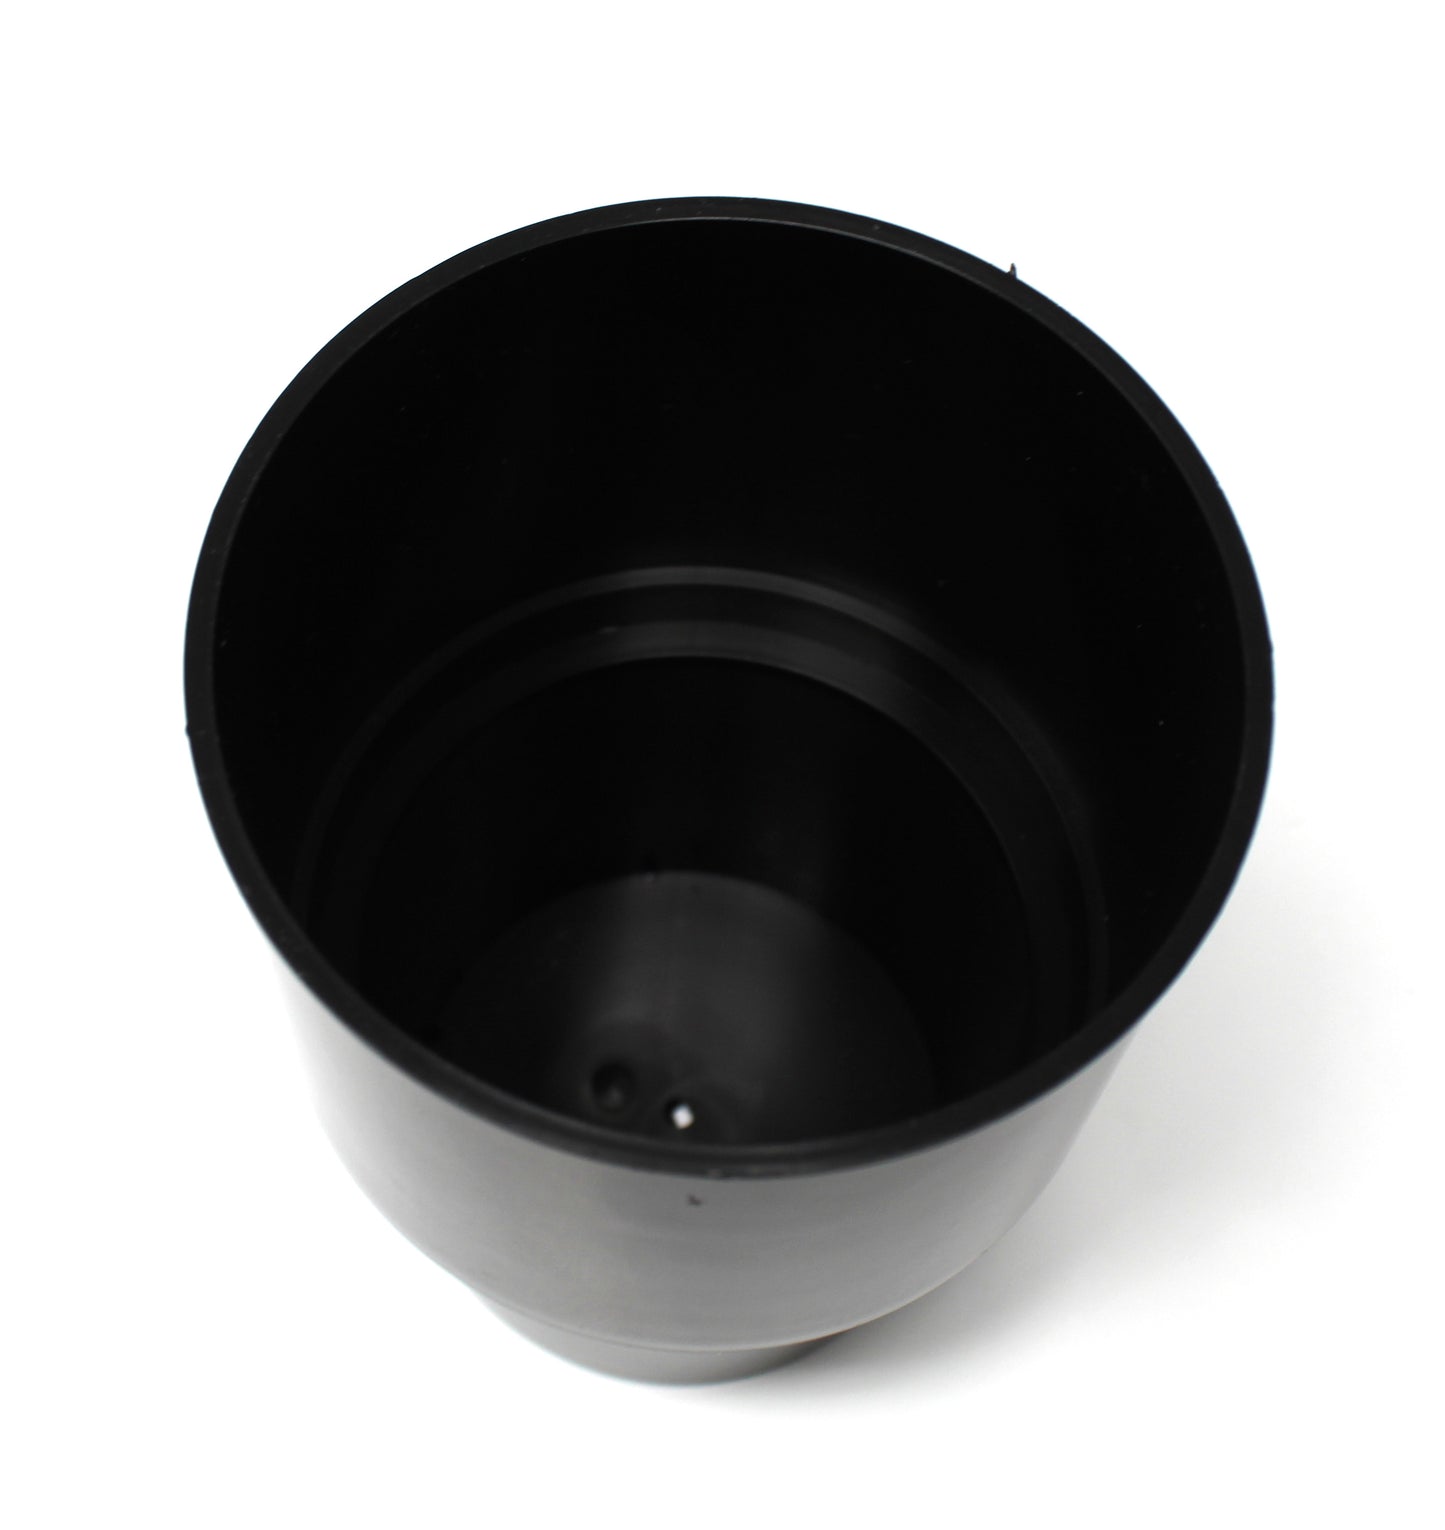 Black Universal Plastic Jumbo Drink Cup Holder Insert holds Jumbo / Oversized / Cups Tumblers